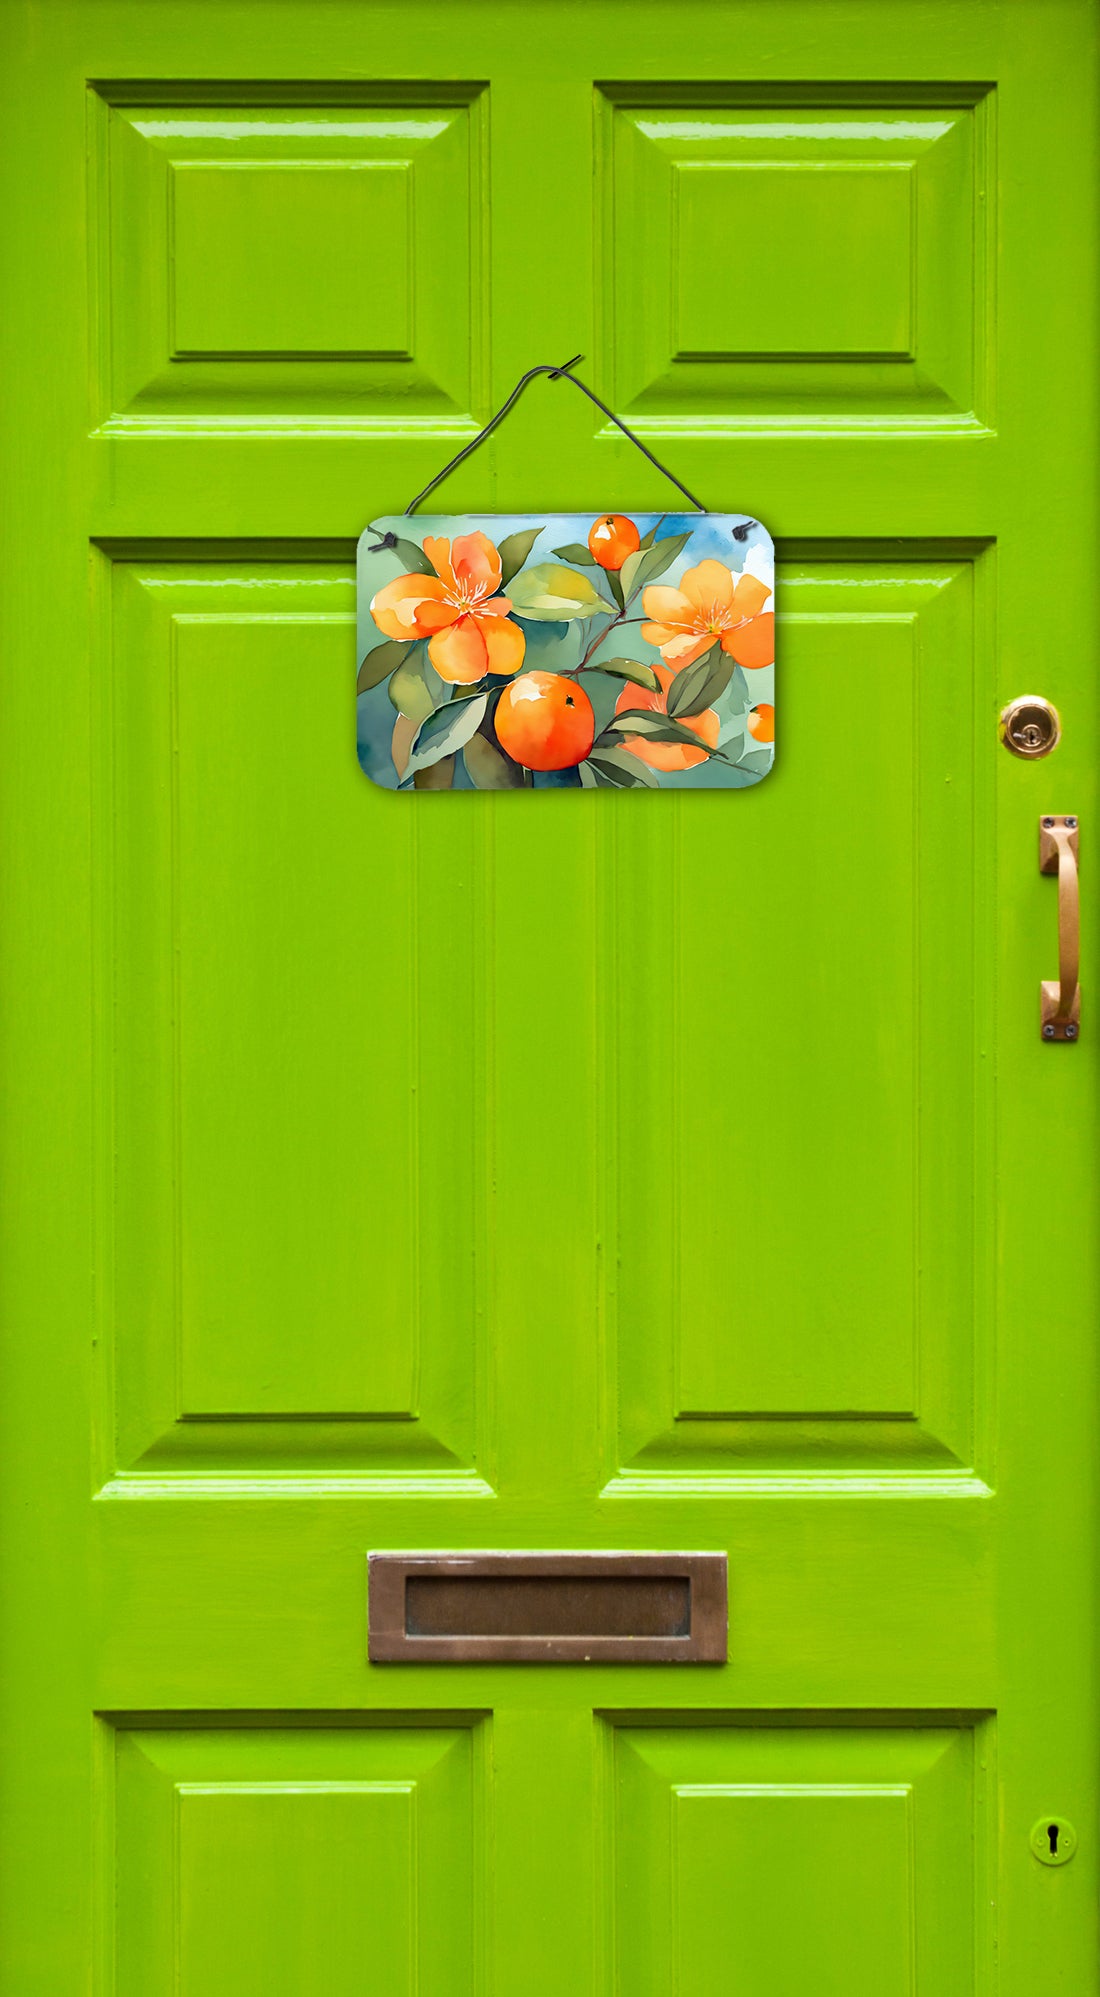 Buy this Florida Orange Blossom in Watercolor Wall or Door Hanging Prints